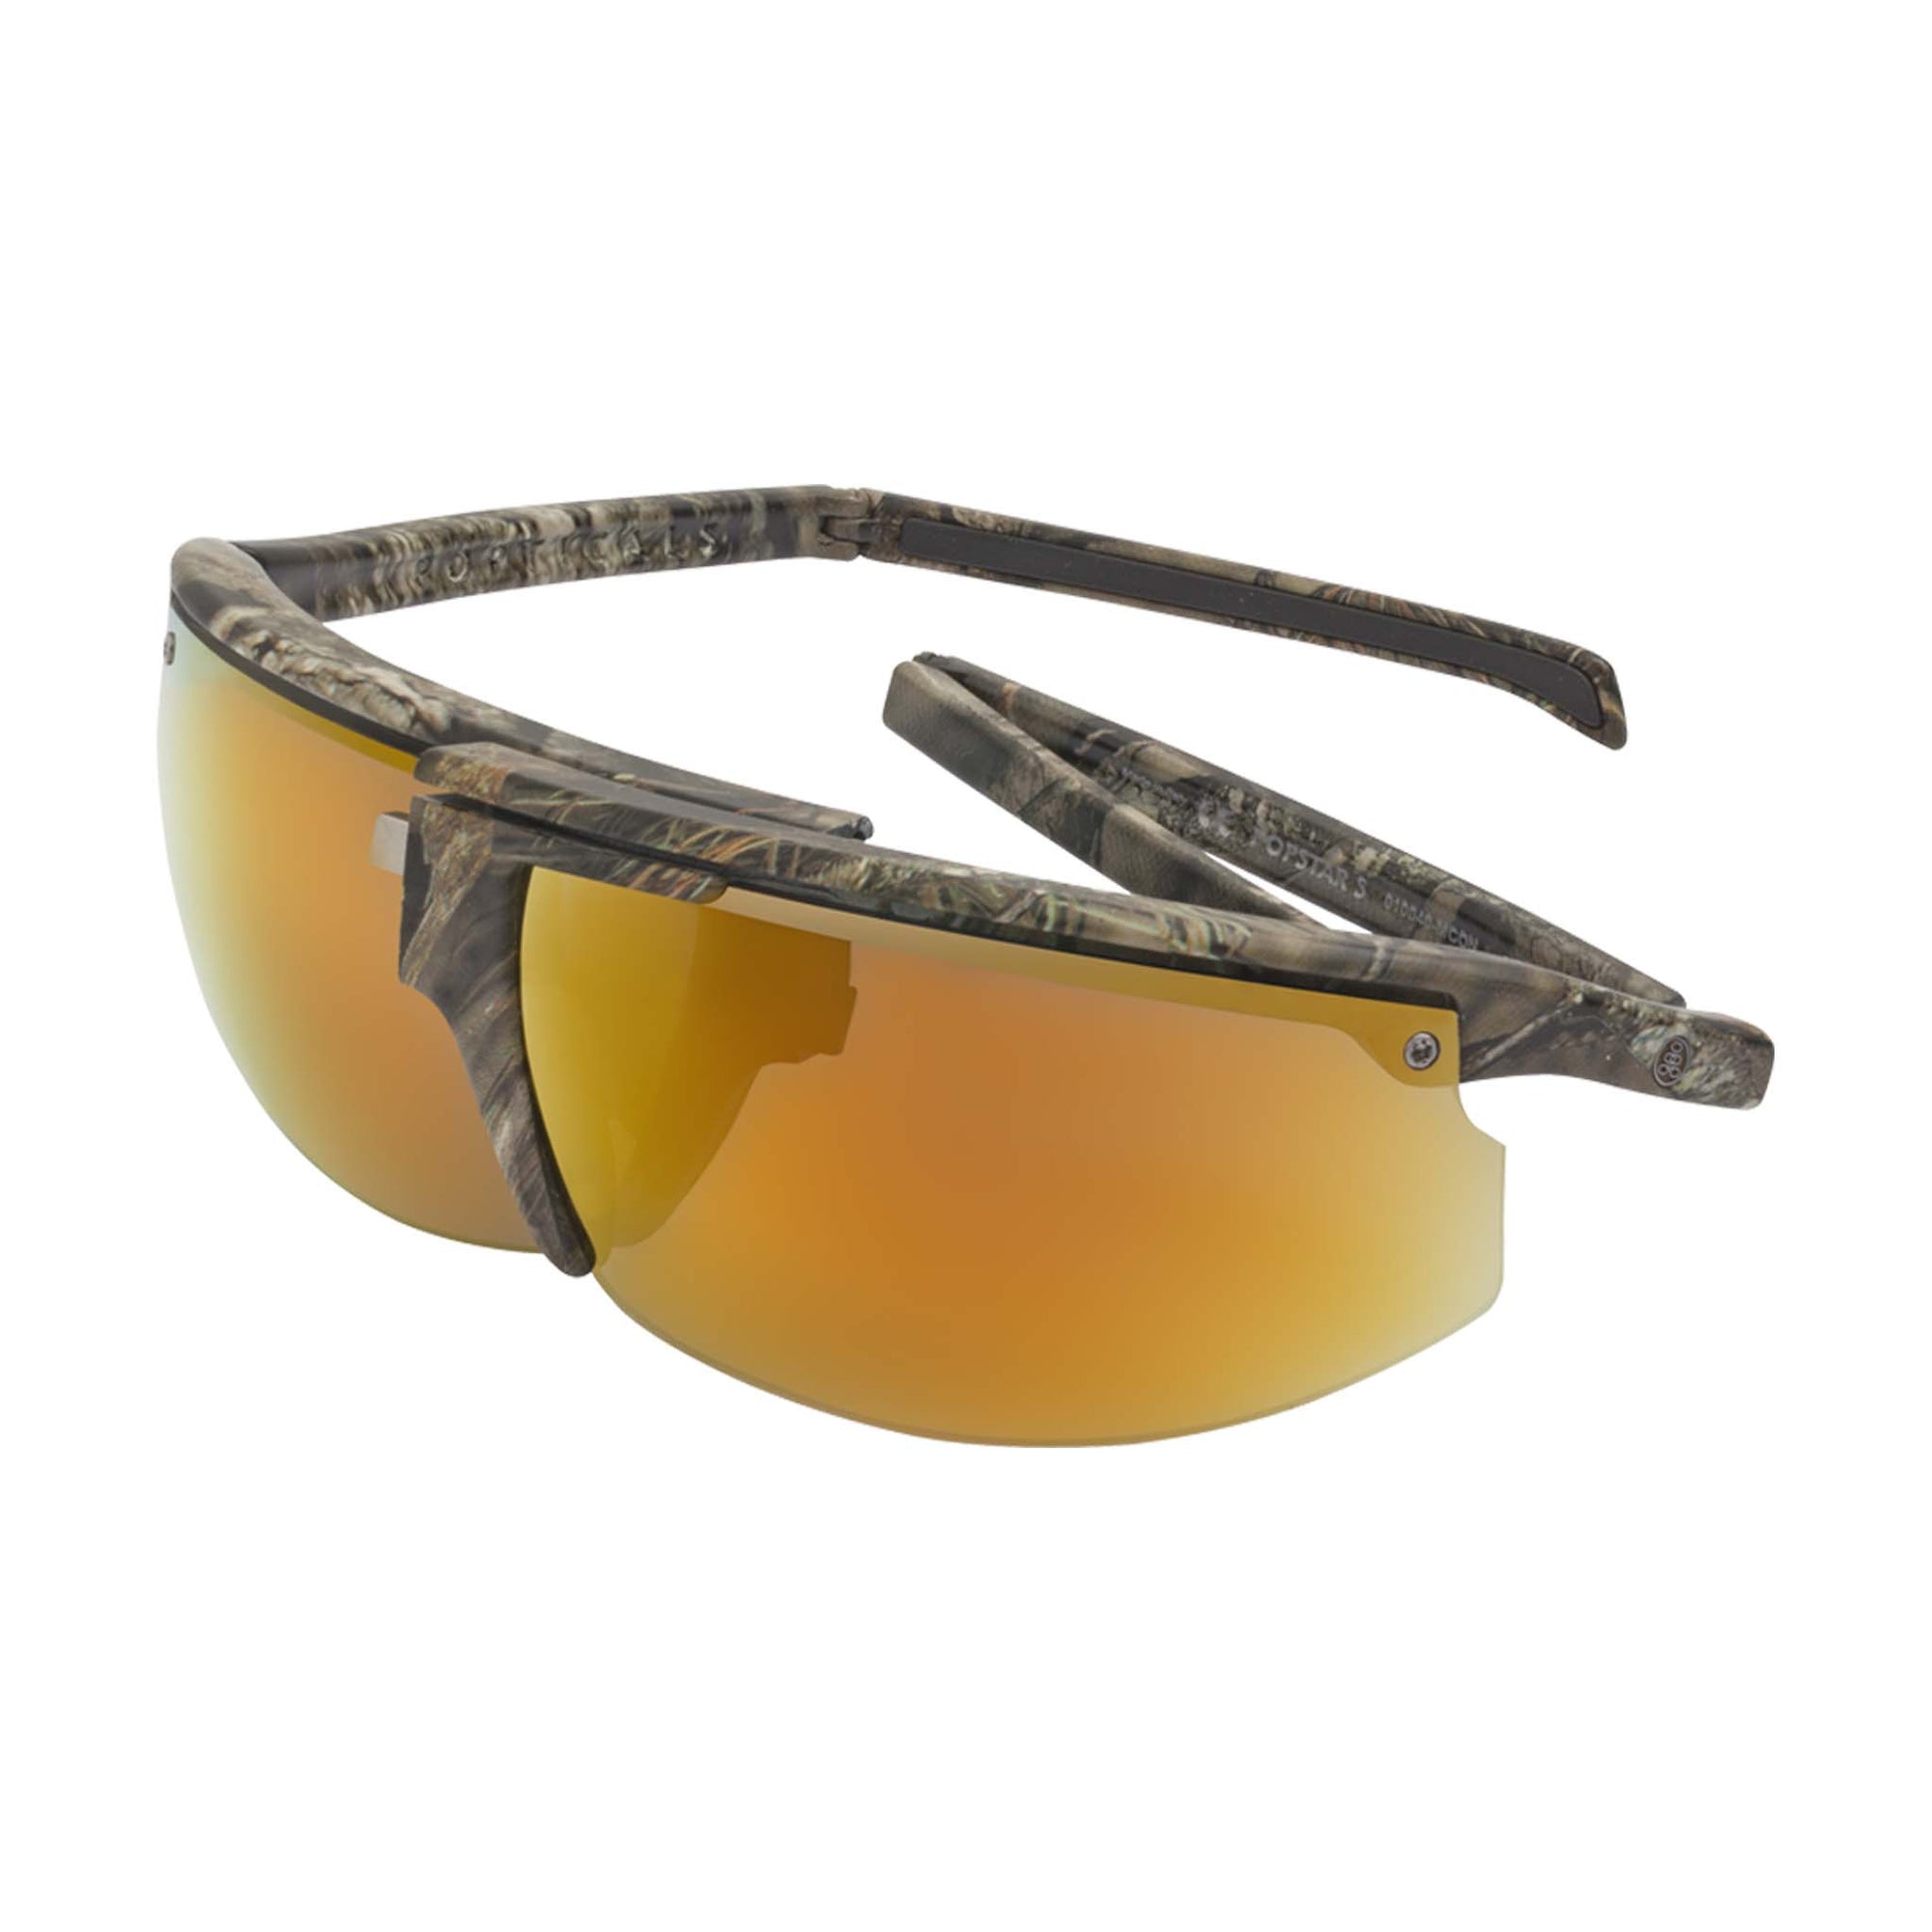 Popticals, Premium Compact Sunglasses, PopStar, 010040-MCON, Polarized Sunglasses, Matte Mossy Oak Break-Up Frame, Gray Lenses w/Orange Mirror Finish, Glam View